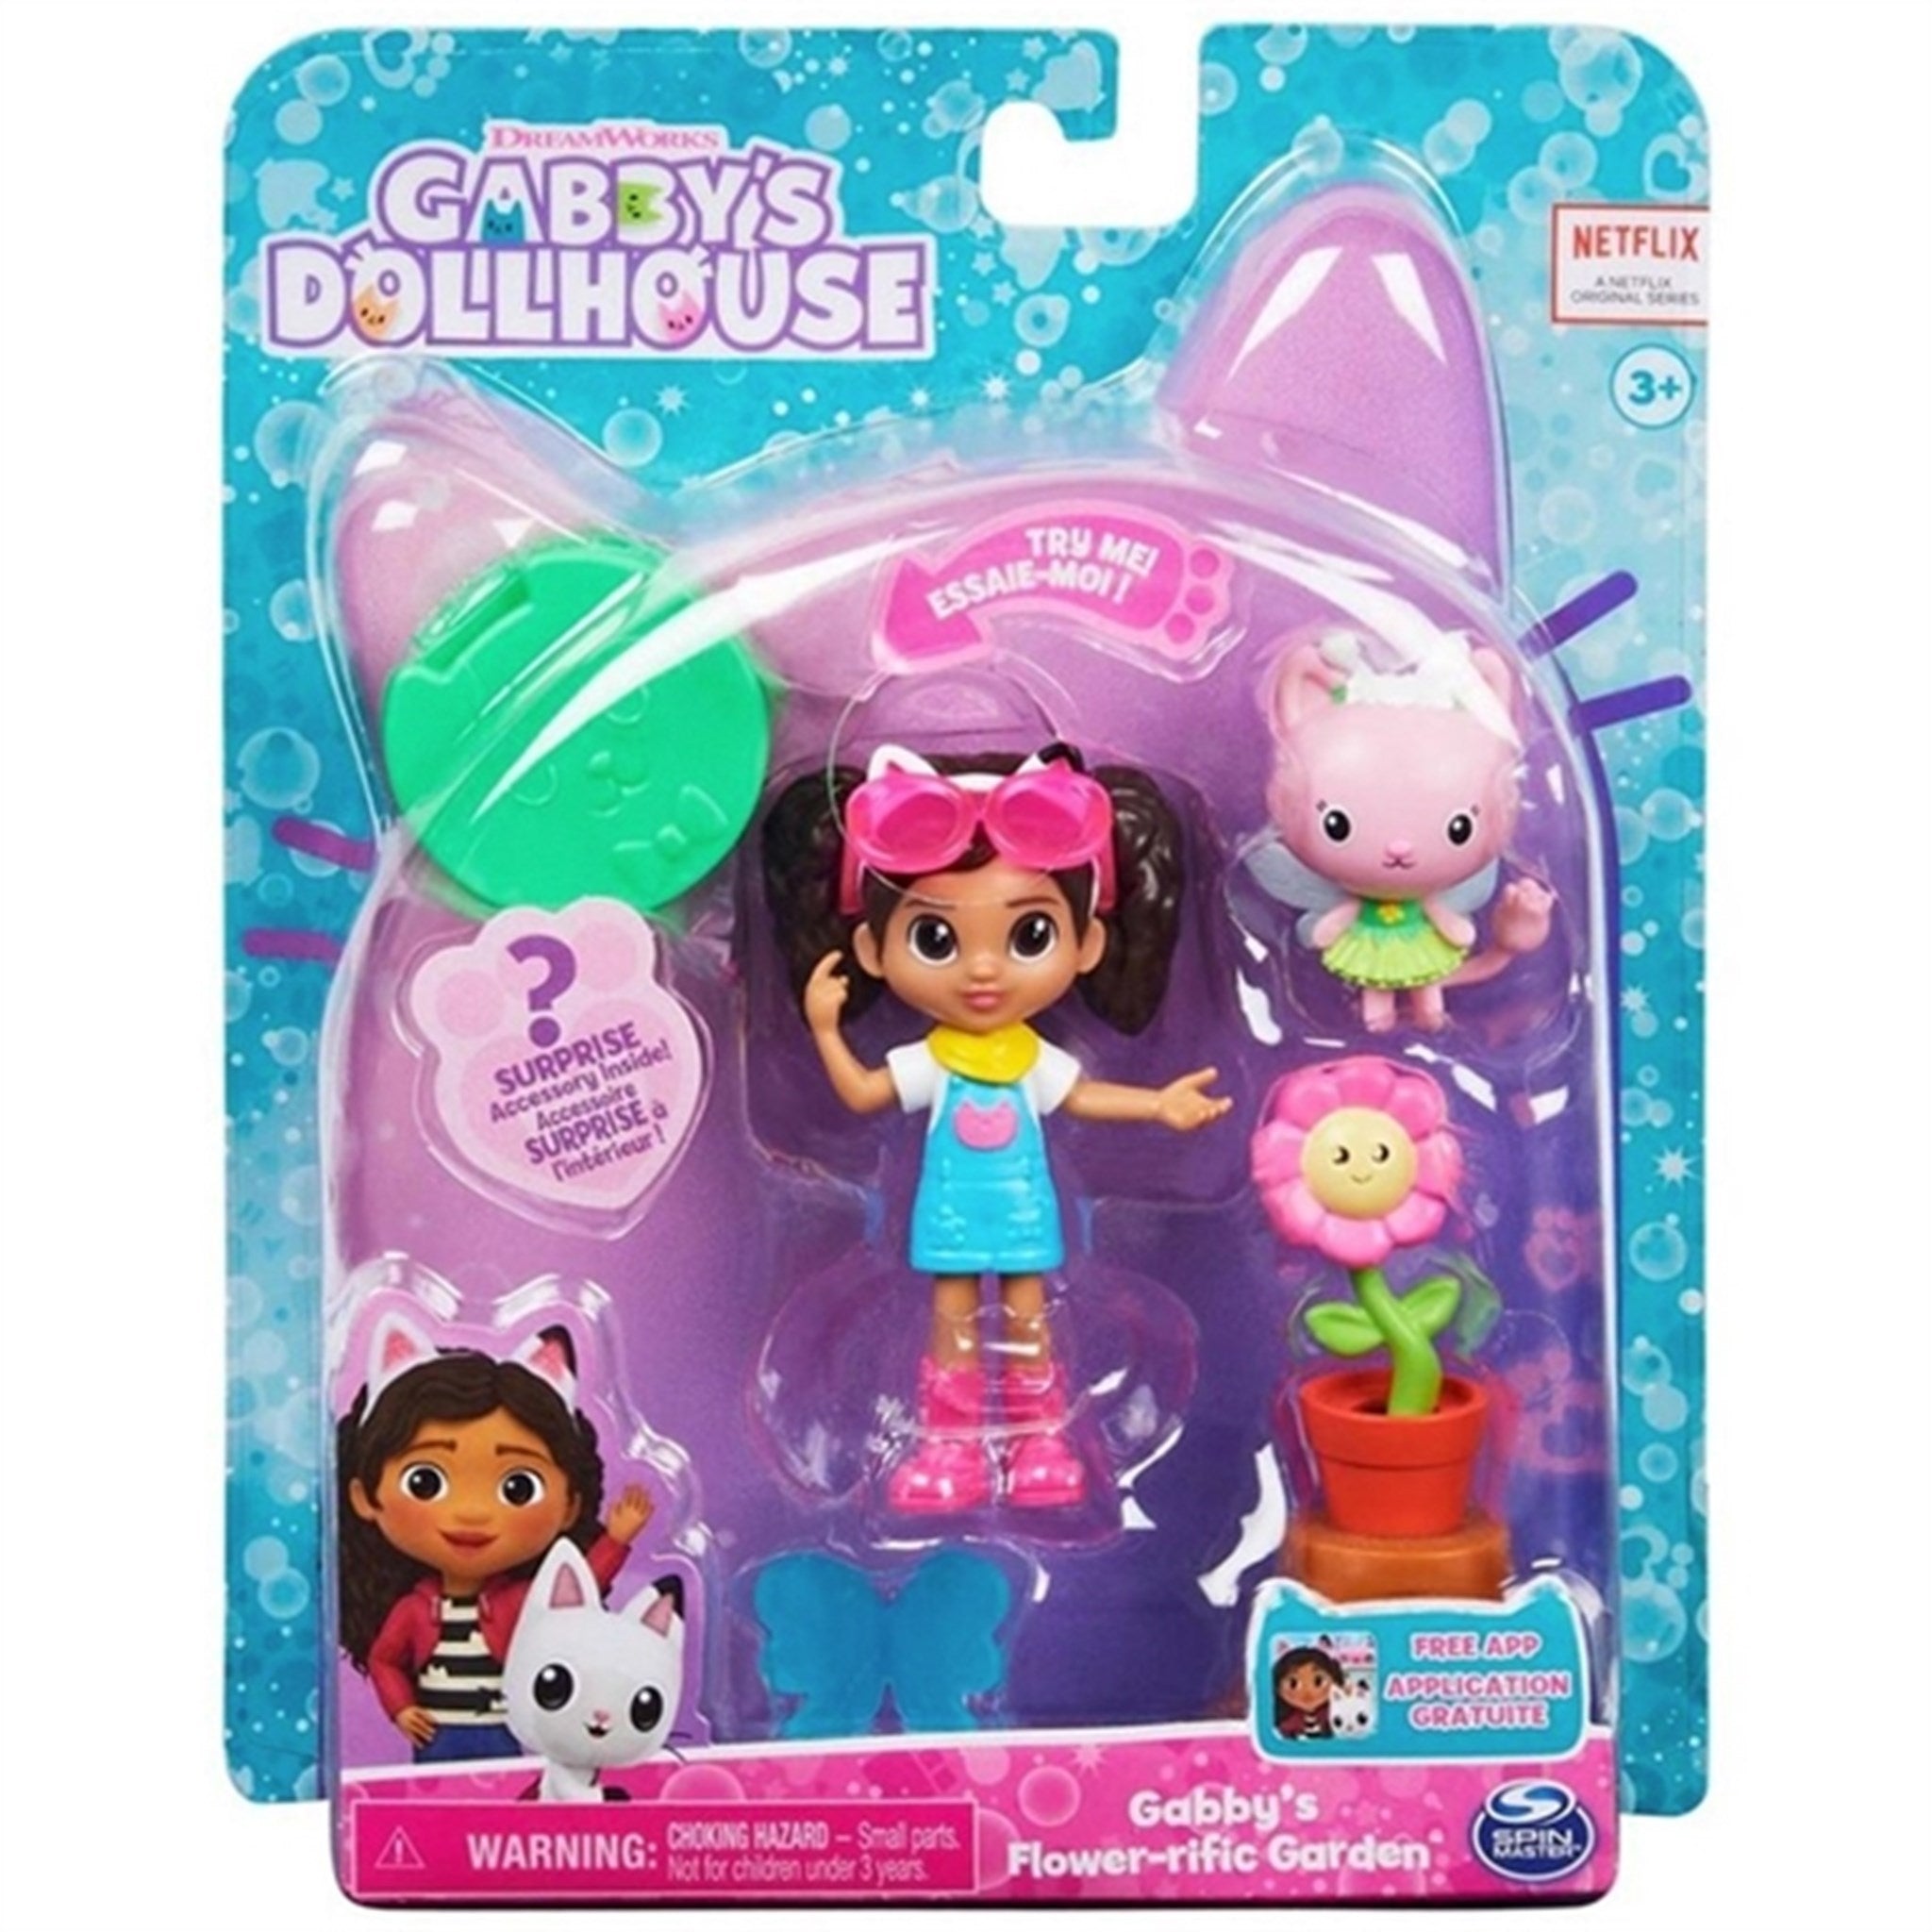 Gabby's Dollhouse - Cat-tivity Pack - Flower Garden 4